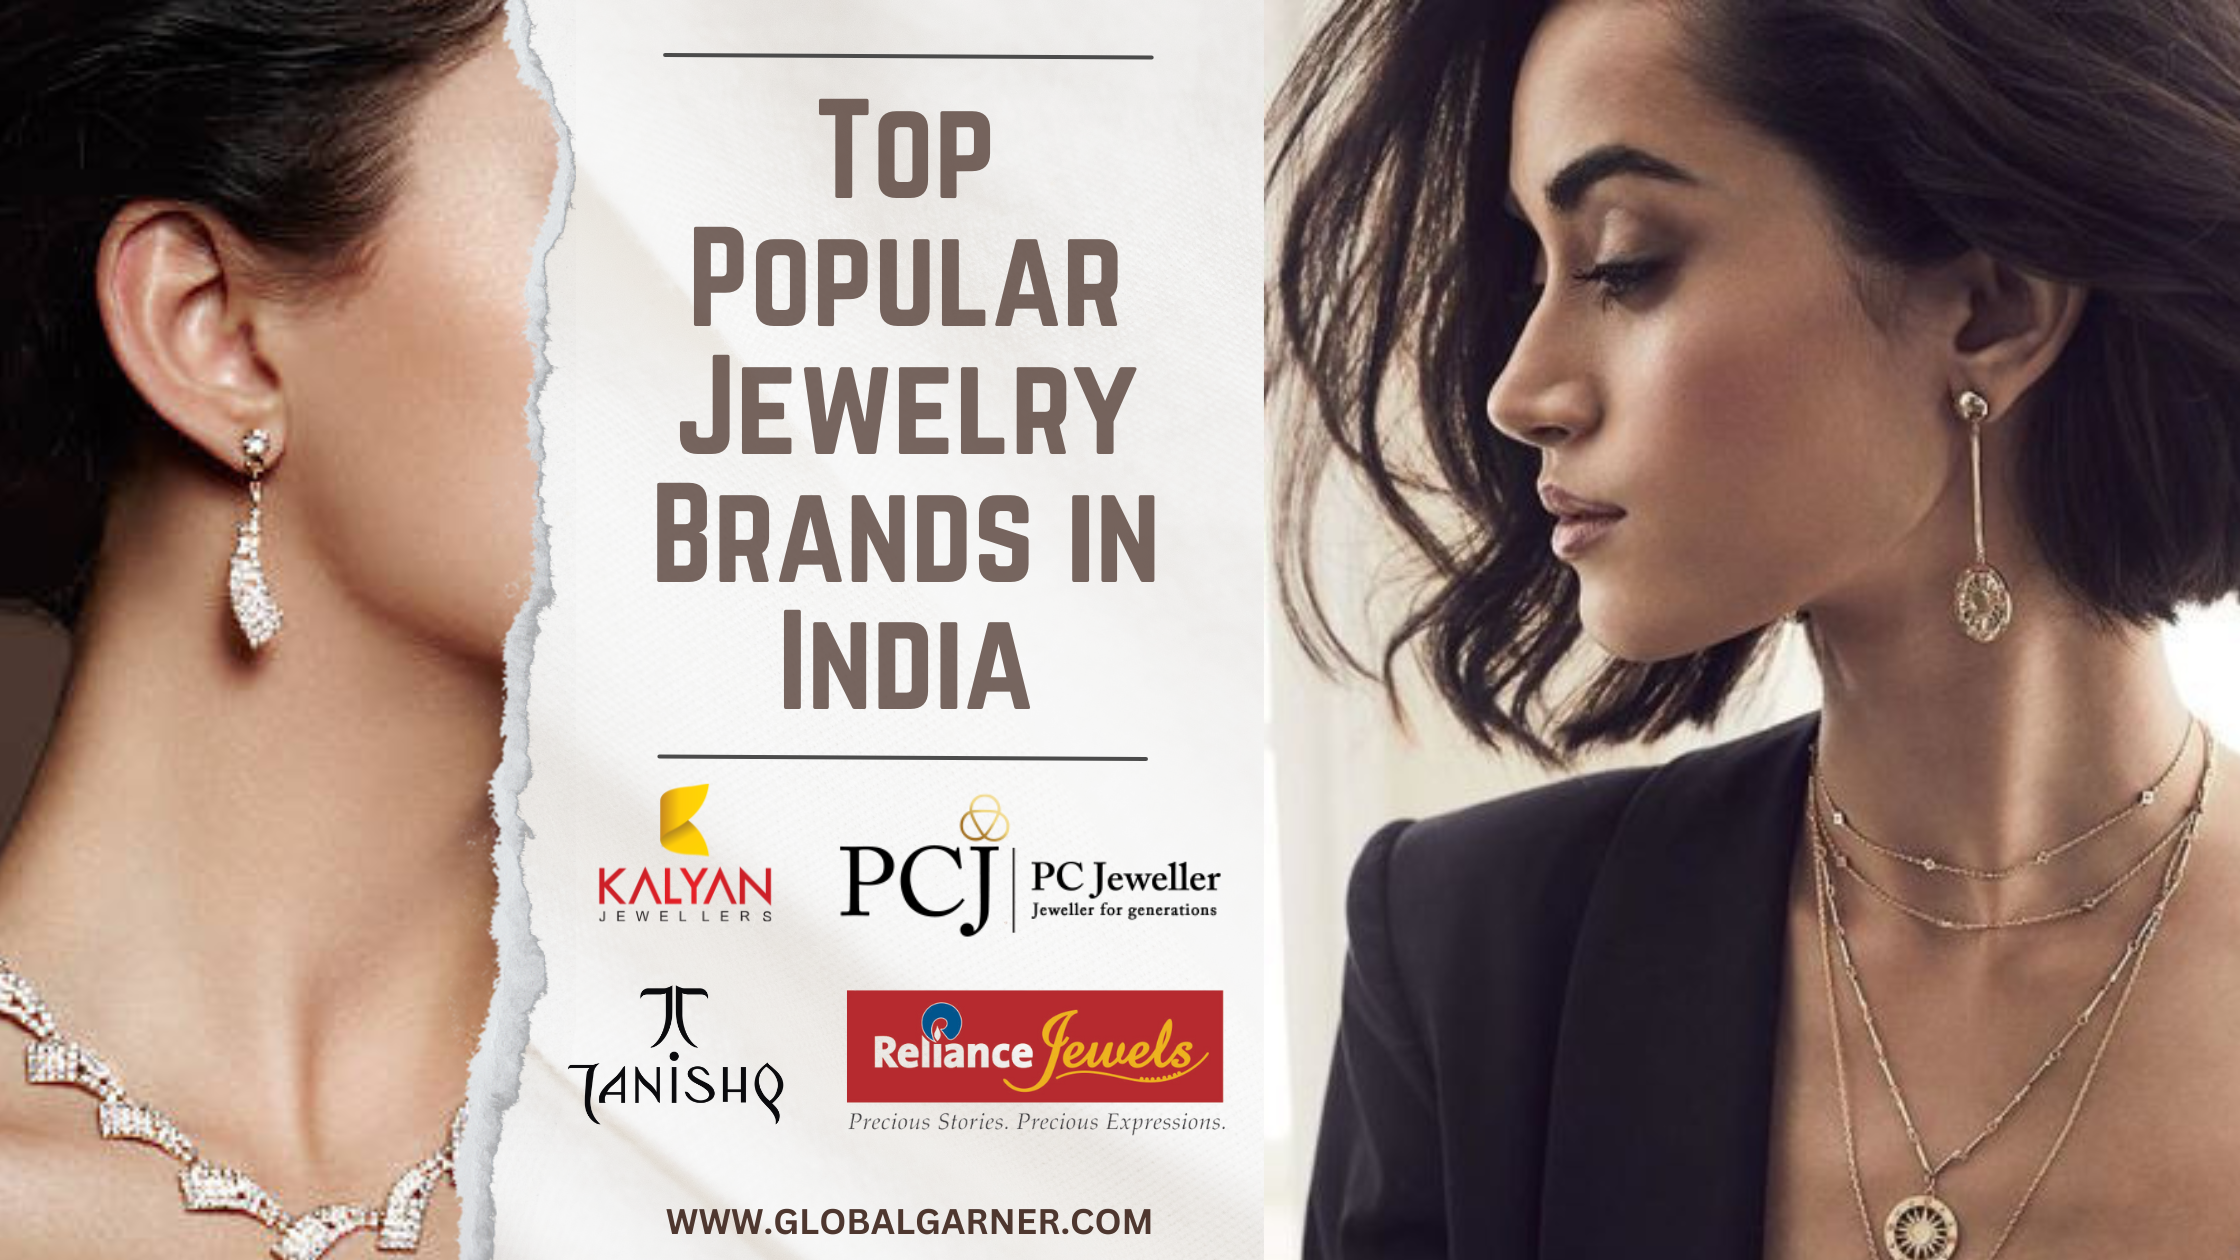 Top Popular Jewelry Brands in India